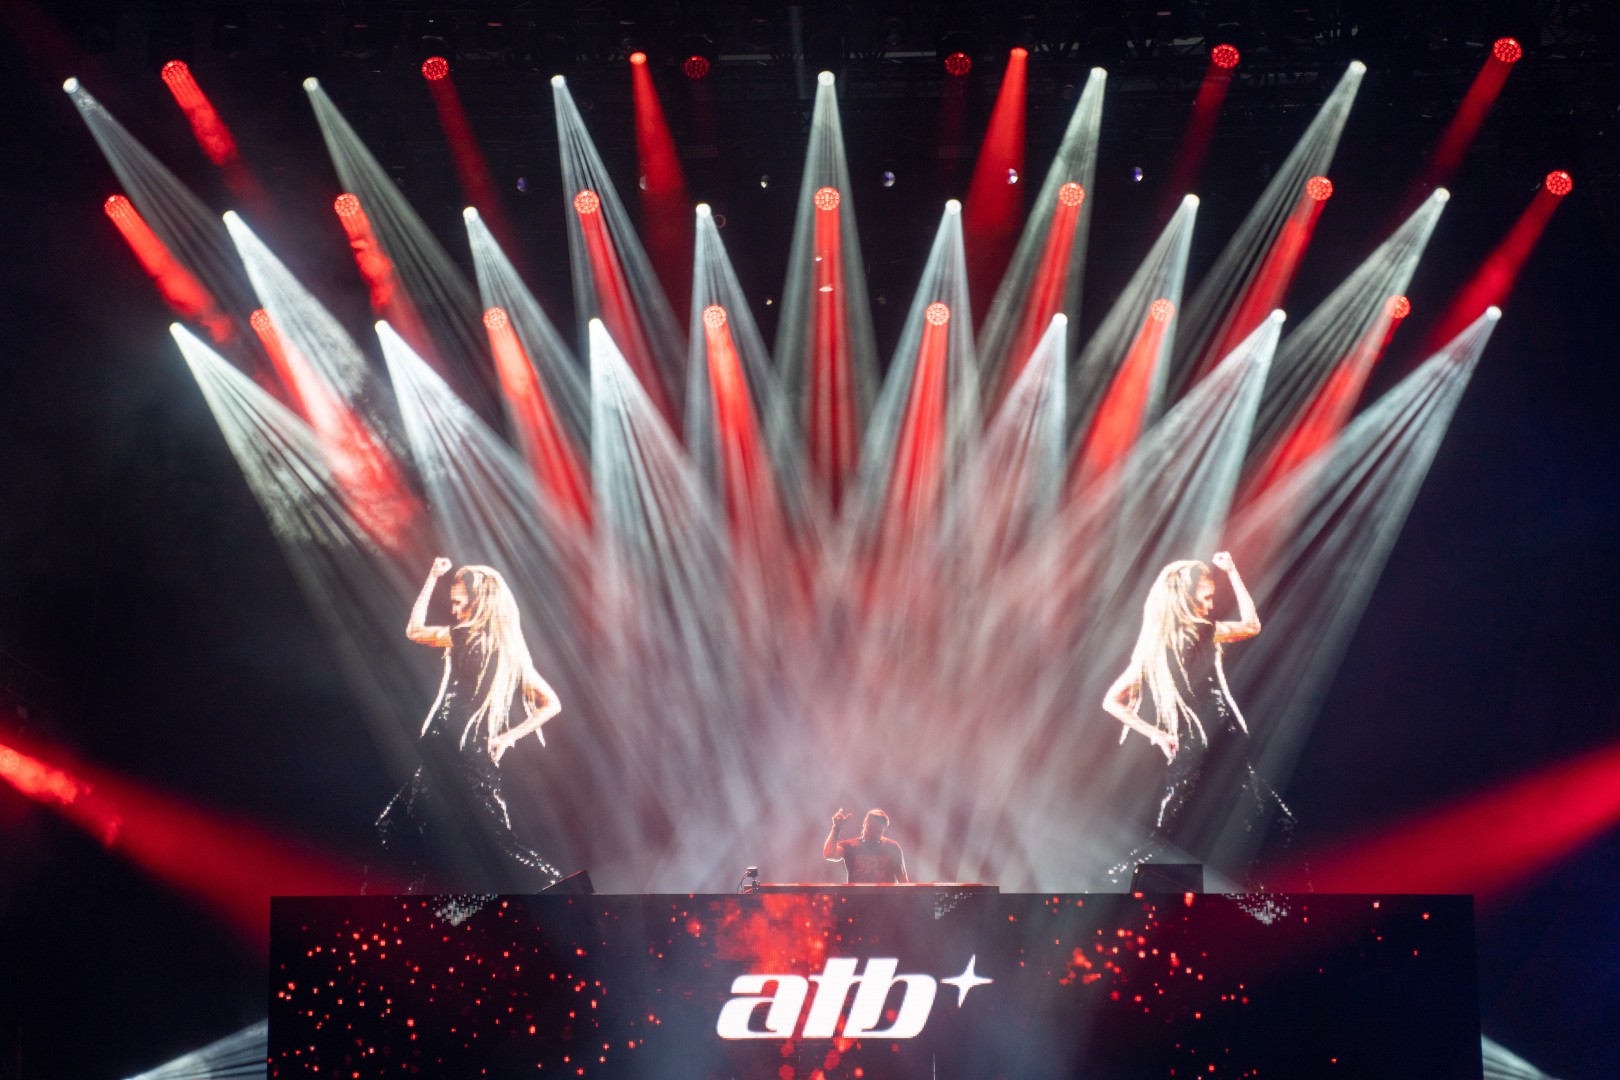 ATB at Cluj Arena in Cluj-Napoca on August 8, 2022 (bf237af6af)